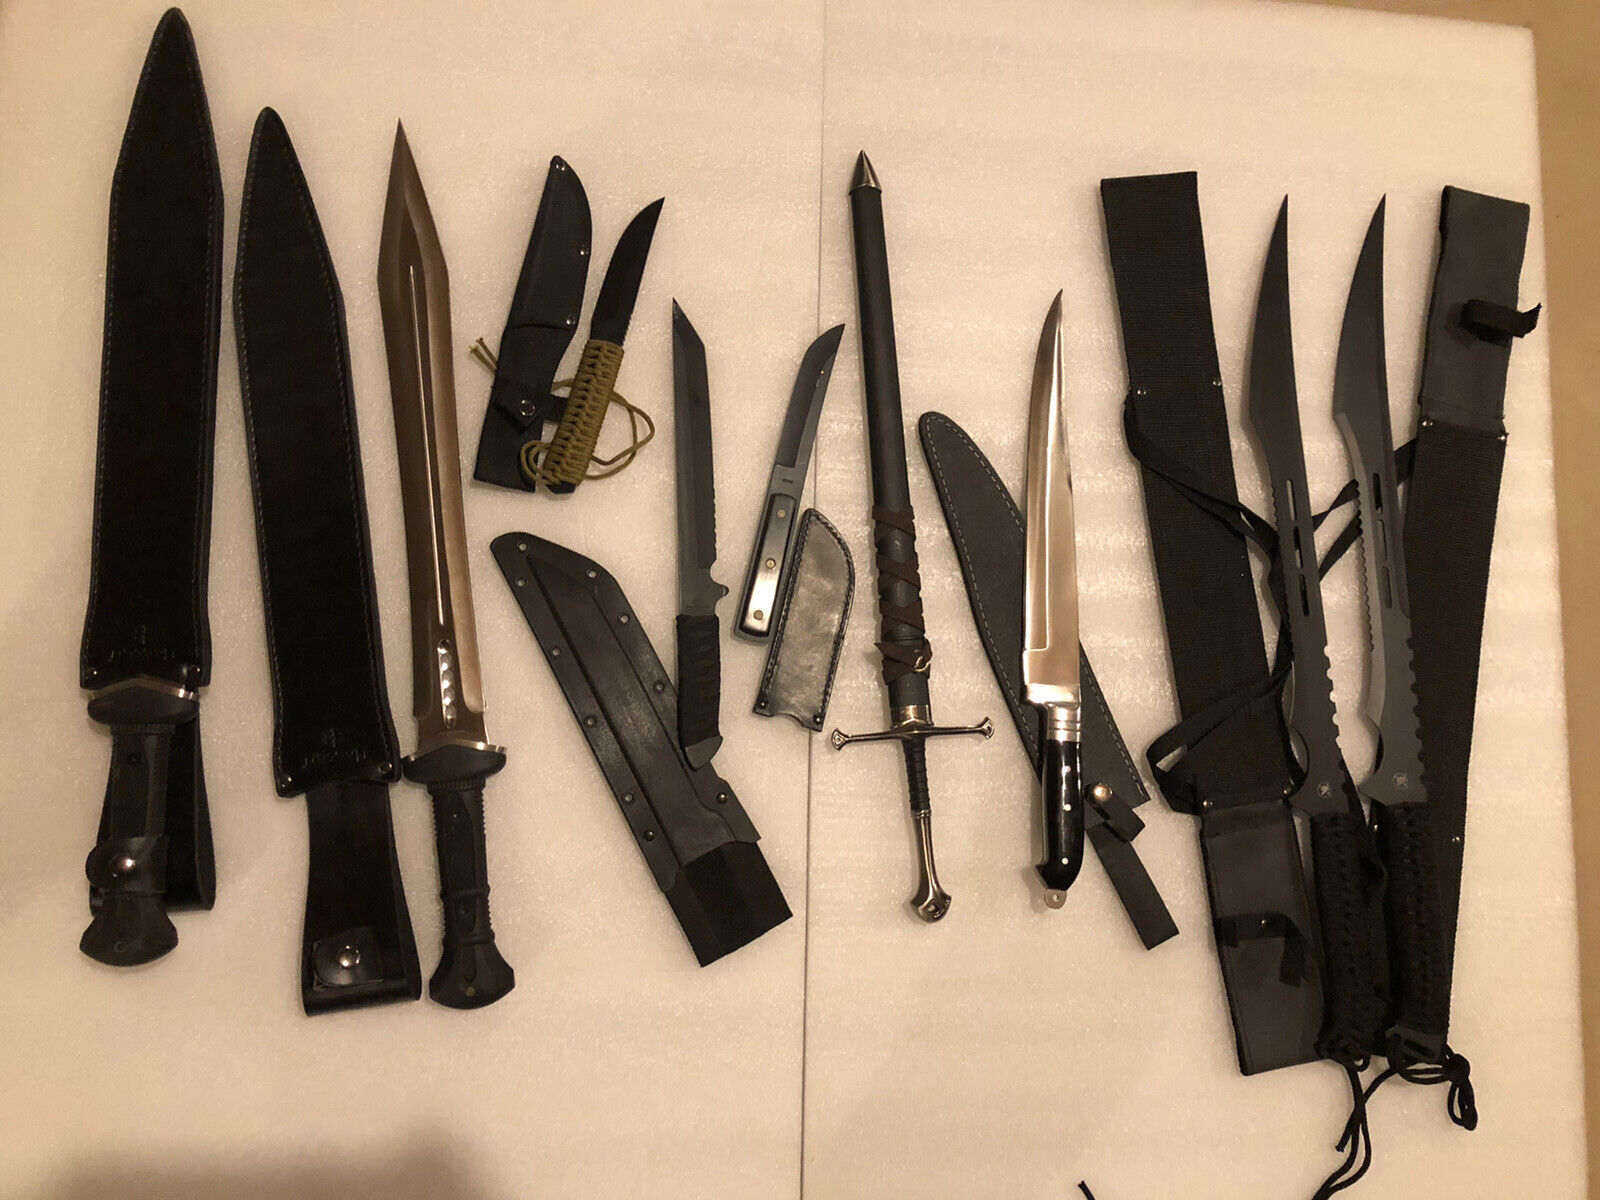 Lot of 8 Knives & Swords - Honshu UC3431 Gladiator, etc.